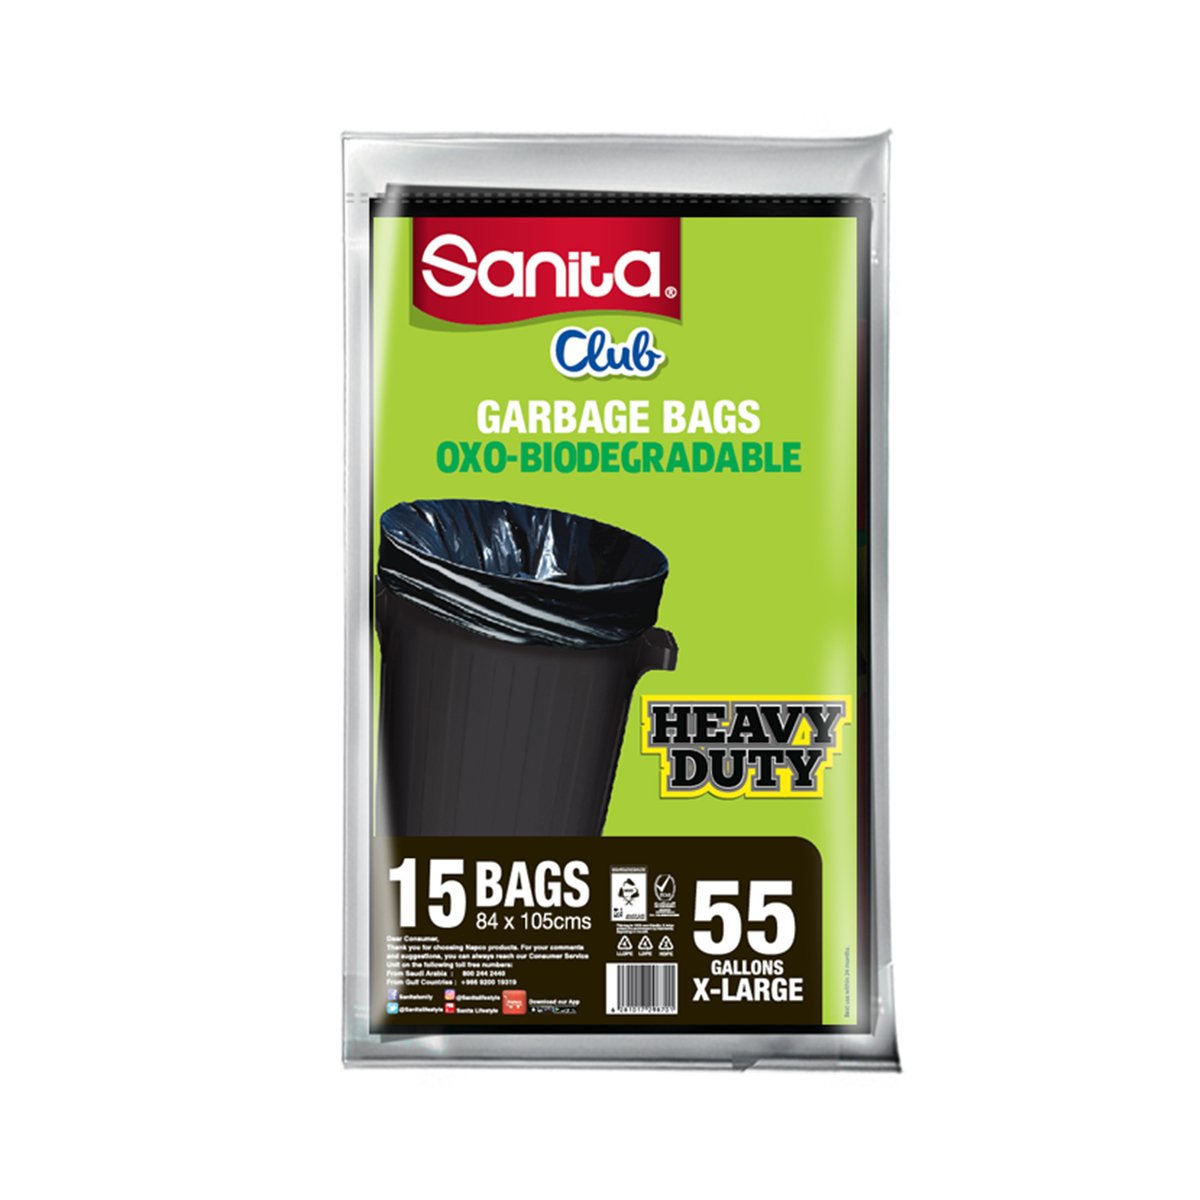 Sanita Club Garbage Bags Oxo-Biodegradable 55 Gallons X-Large Size 84 x 105 cm 15 pcs